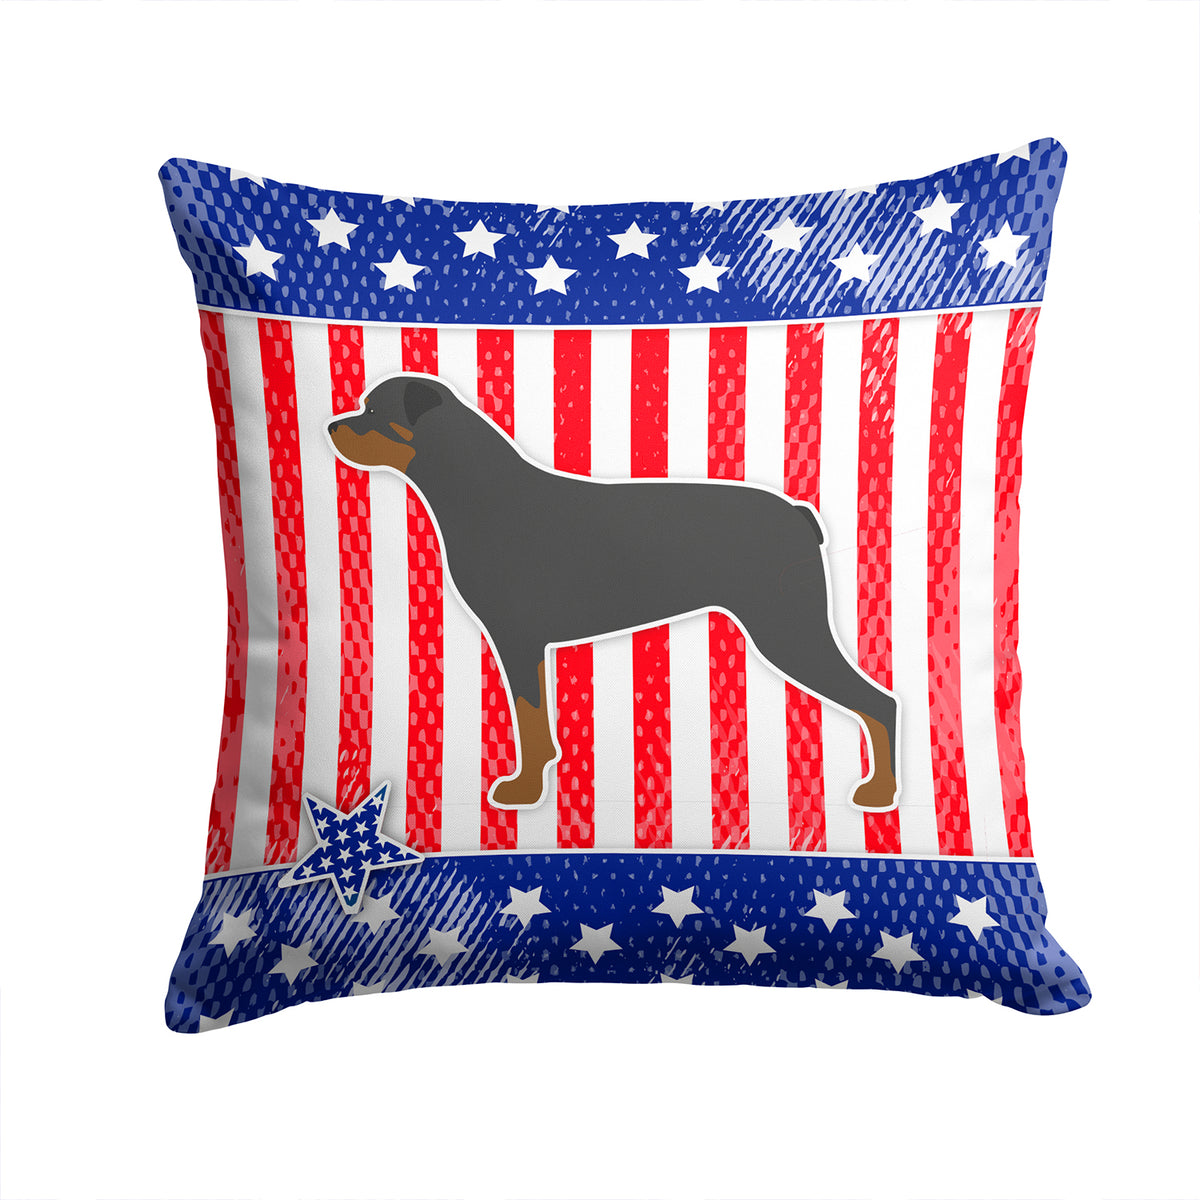 USA Patriotic Rottweiler Fabric Decorative Pillow BB3366PW1414 - the-store.com